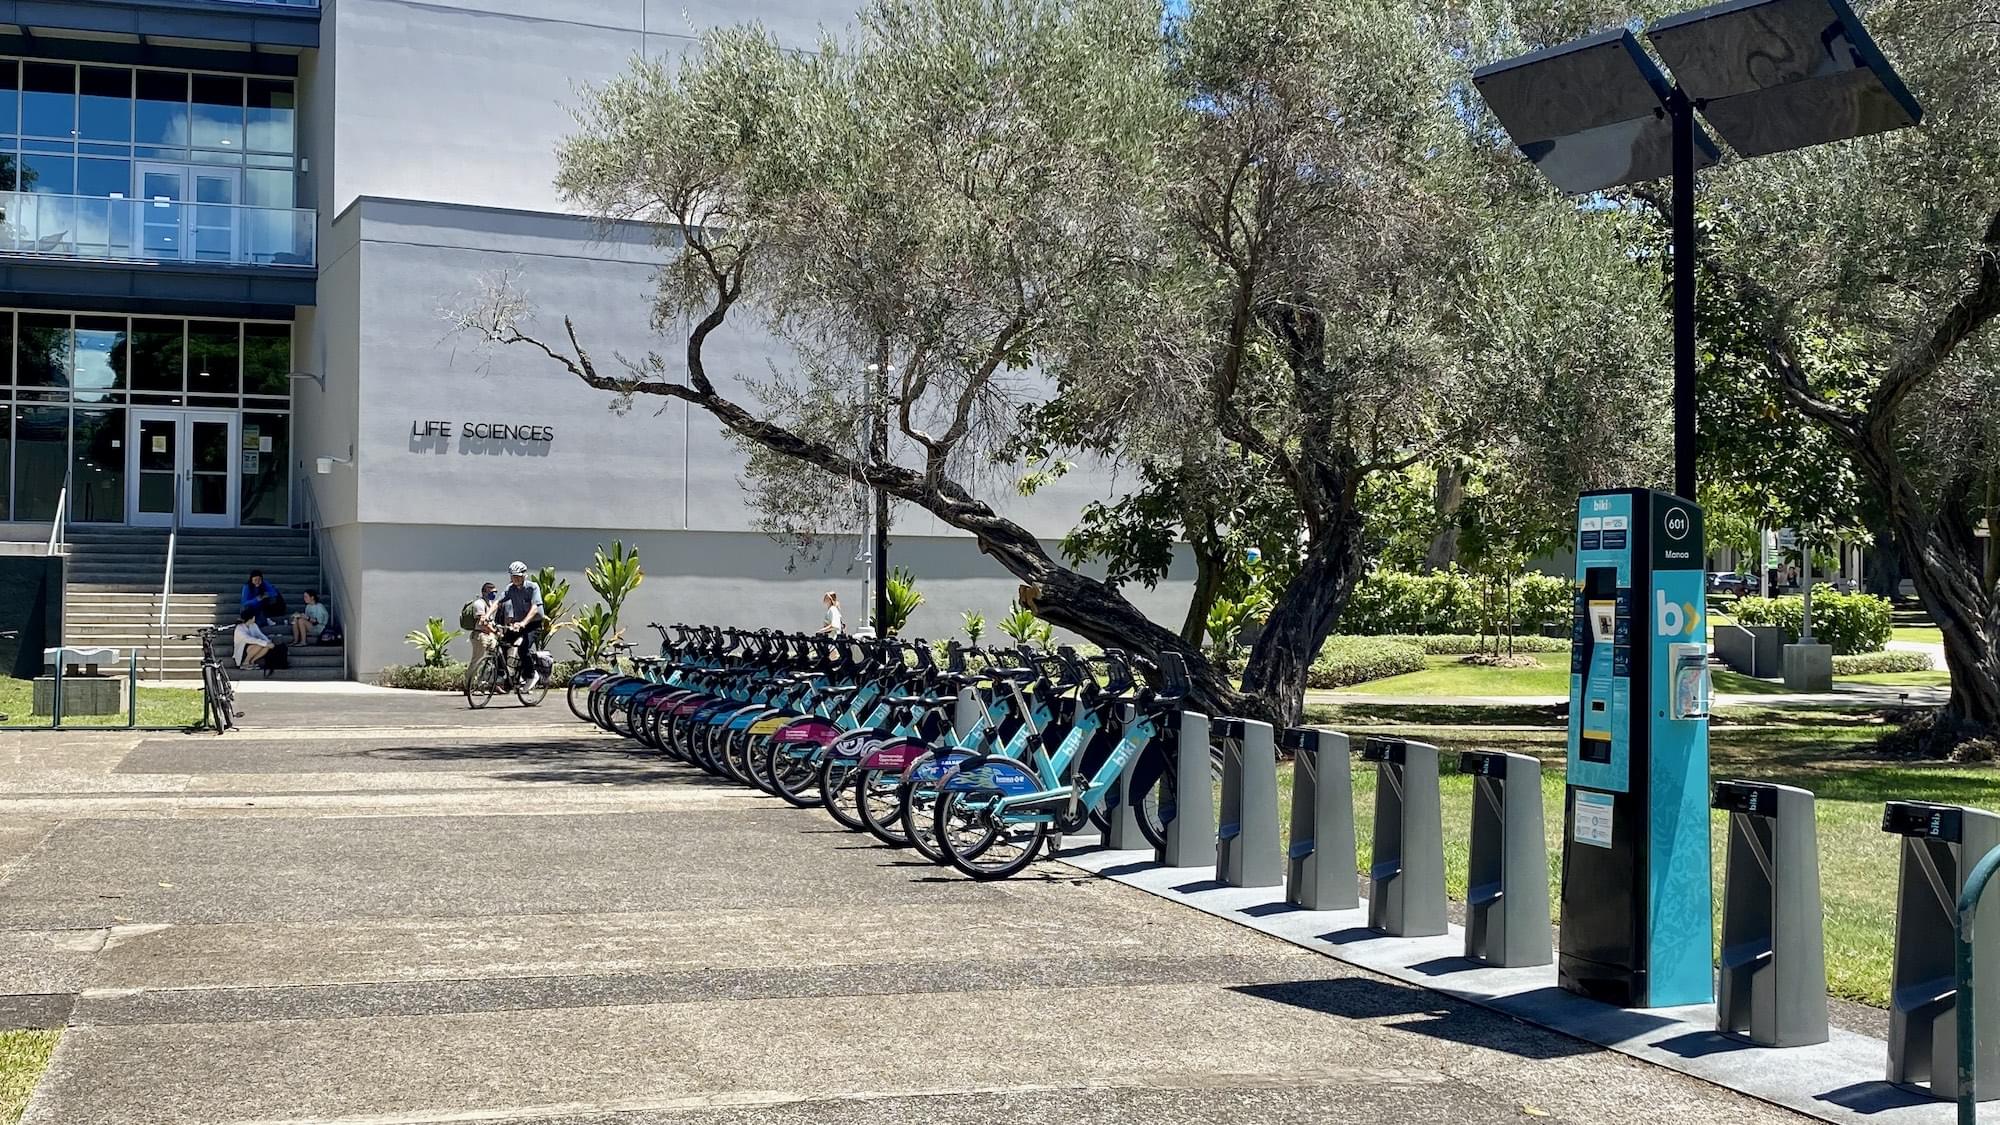 Biki bikes at stop between Hamilton Library and Life Sciences Bldg.